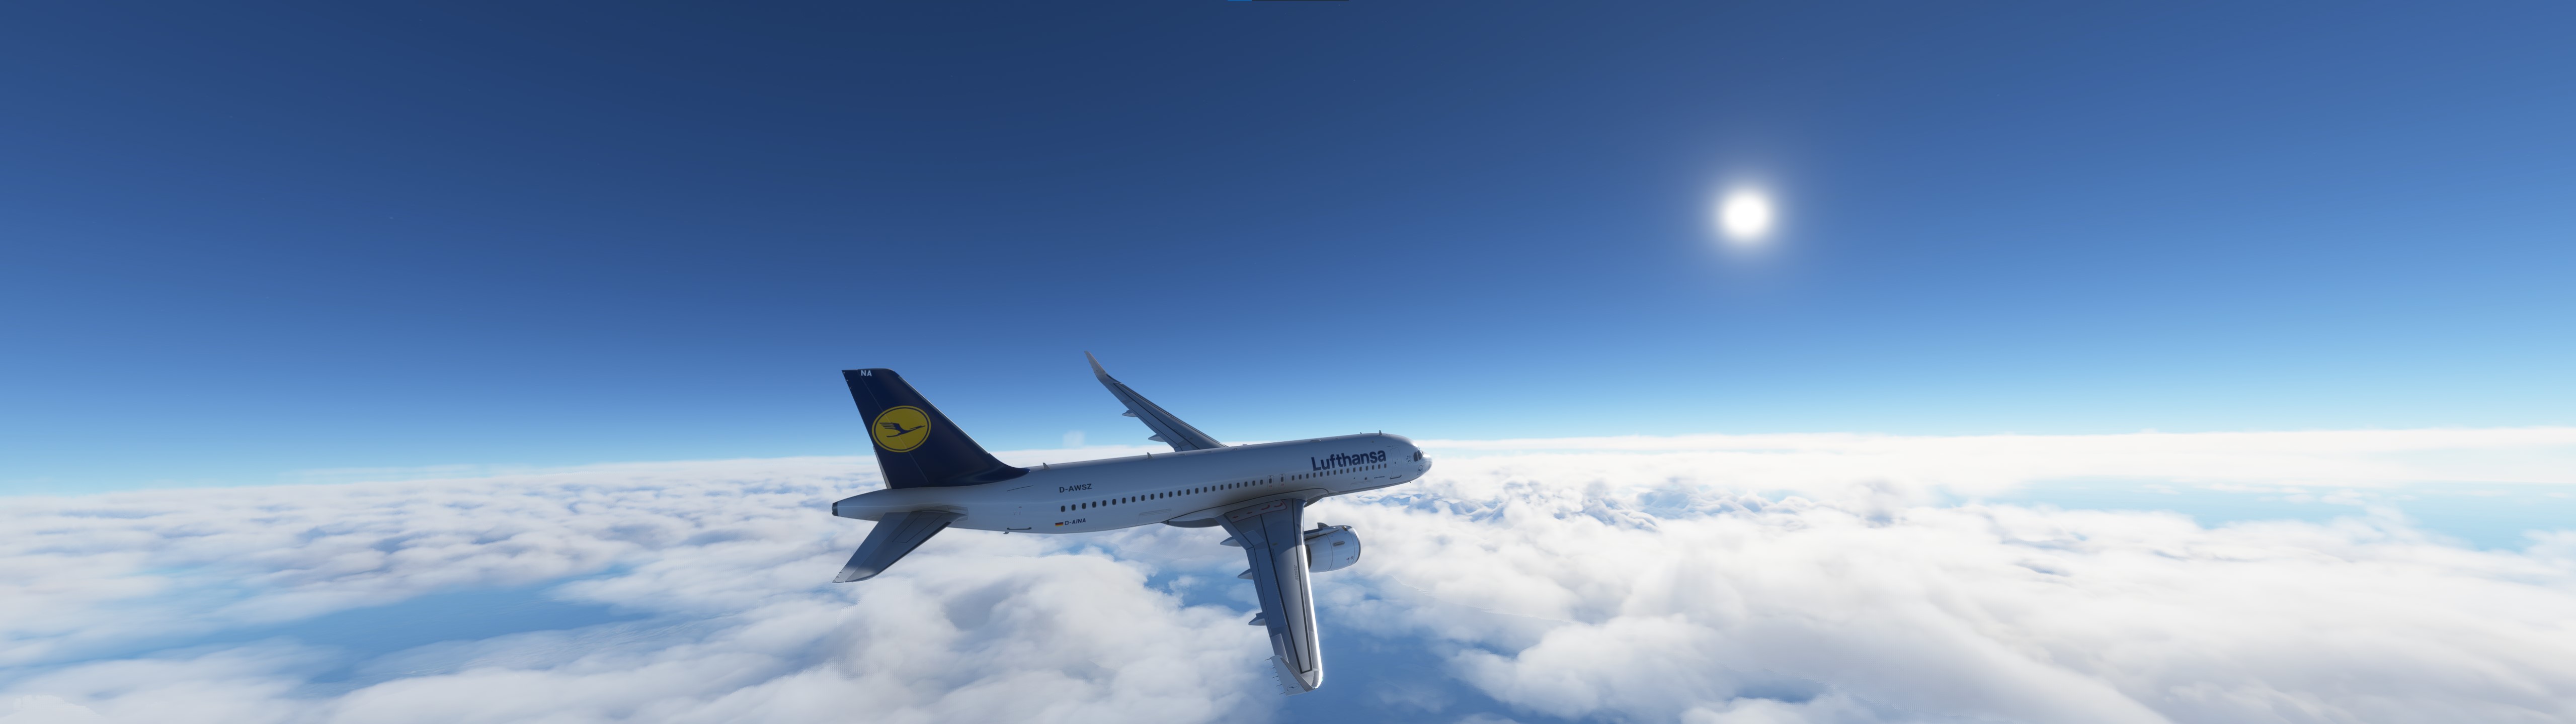 General 5120x1440 flight simulator flying Airbus A320 sky clouds aircraft airplane Lufthansa screen shot PC gaming vehicle passenger aircraft